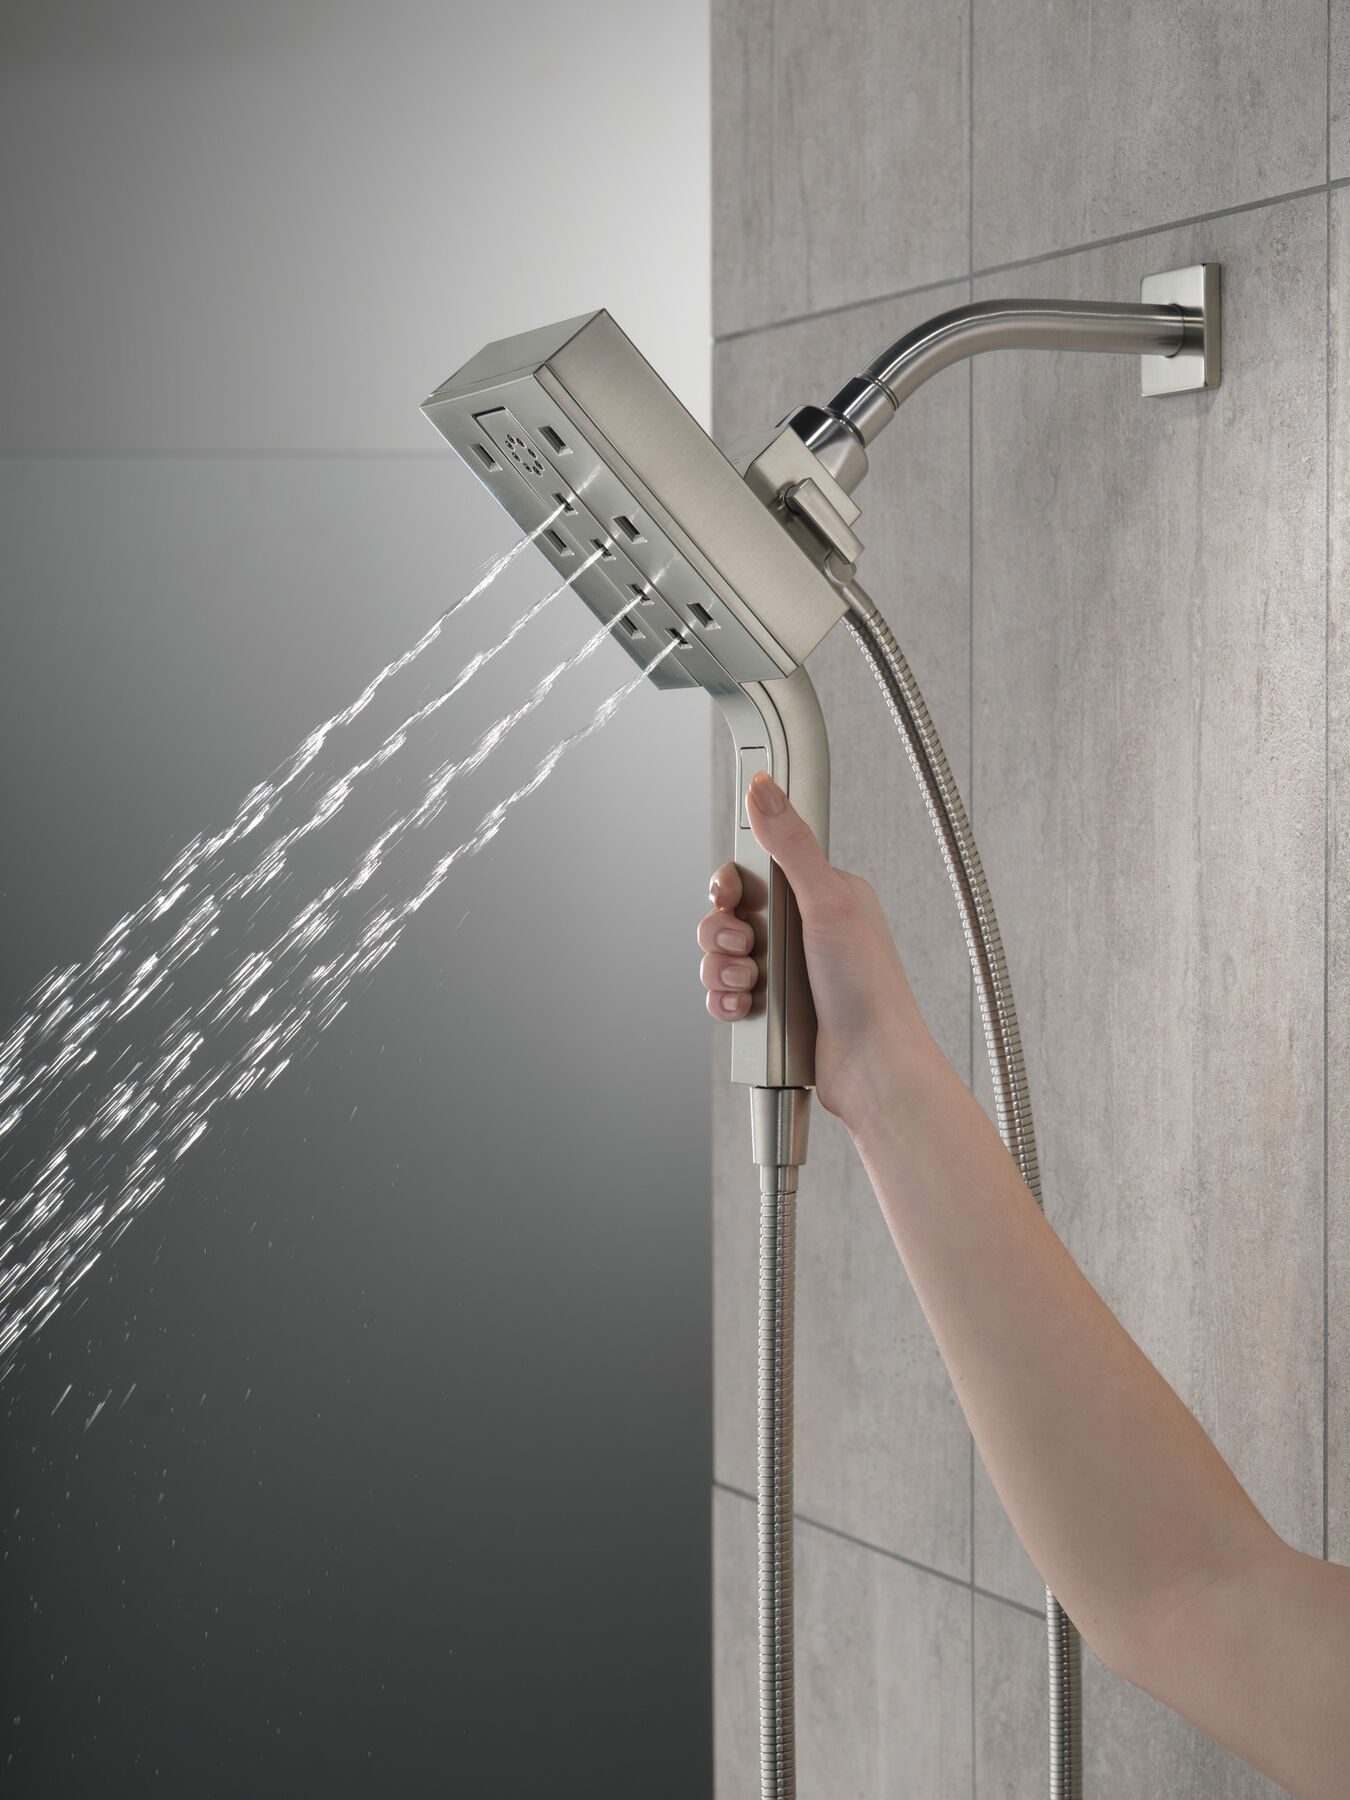 Shower Spray Hose, Pets Shower Head Spray Drains Strainer Pet Bath